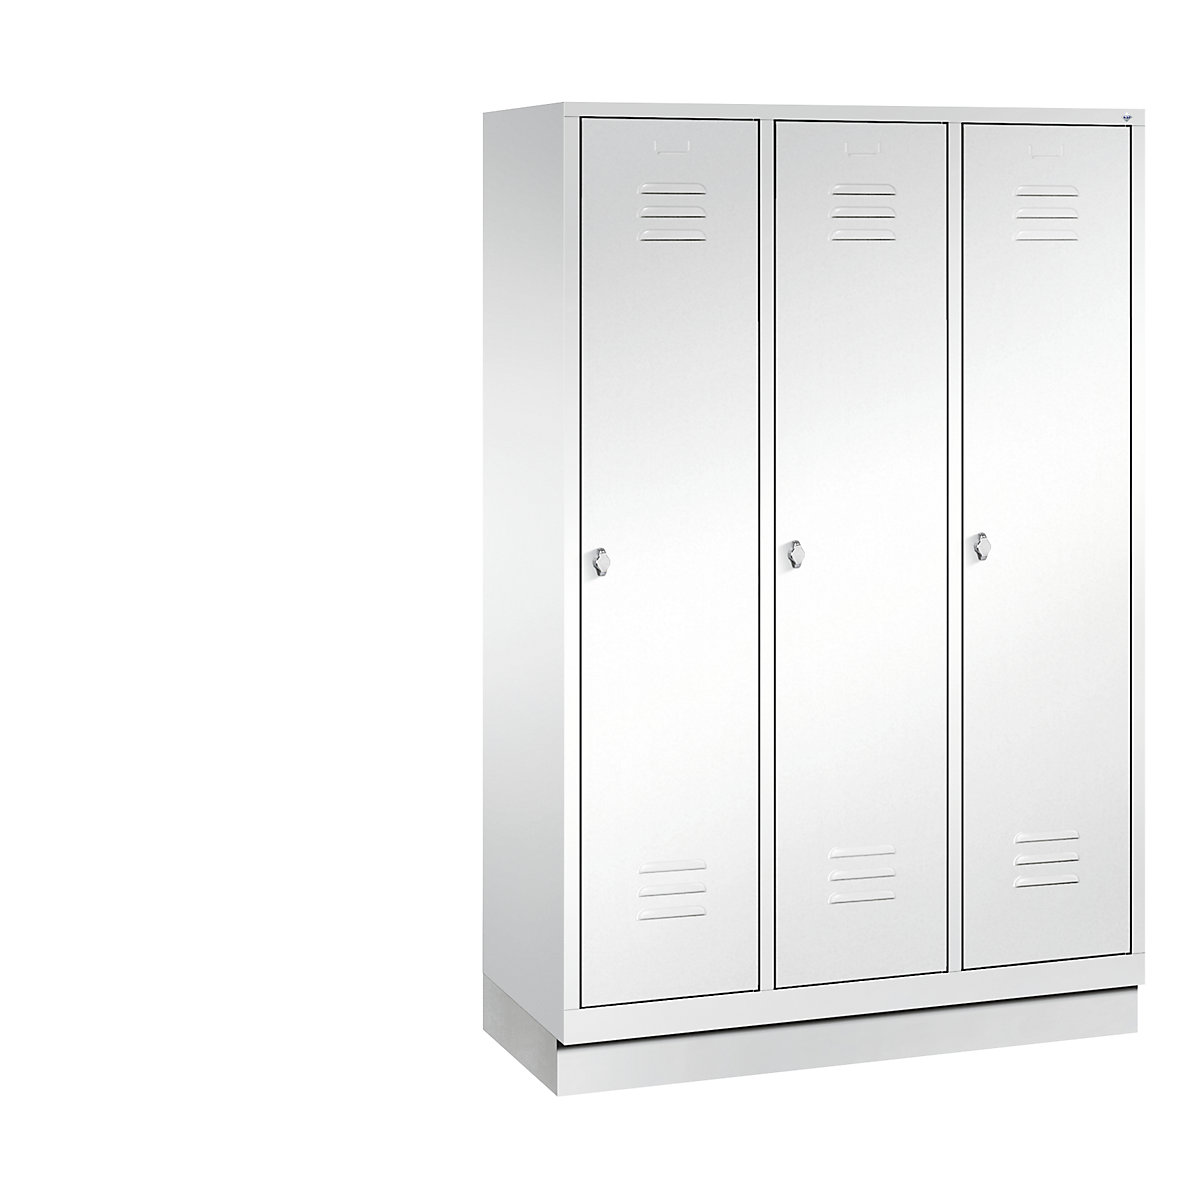 CLASSIC cloakroom locker with plinth - C+P